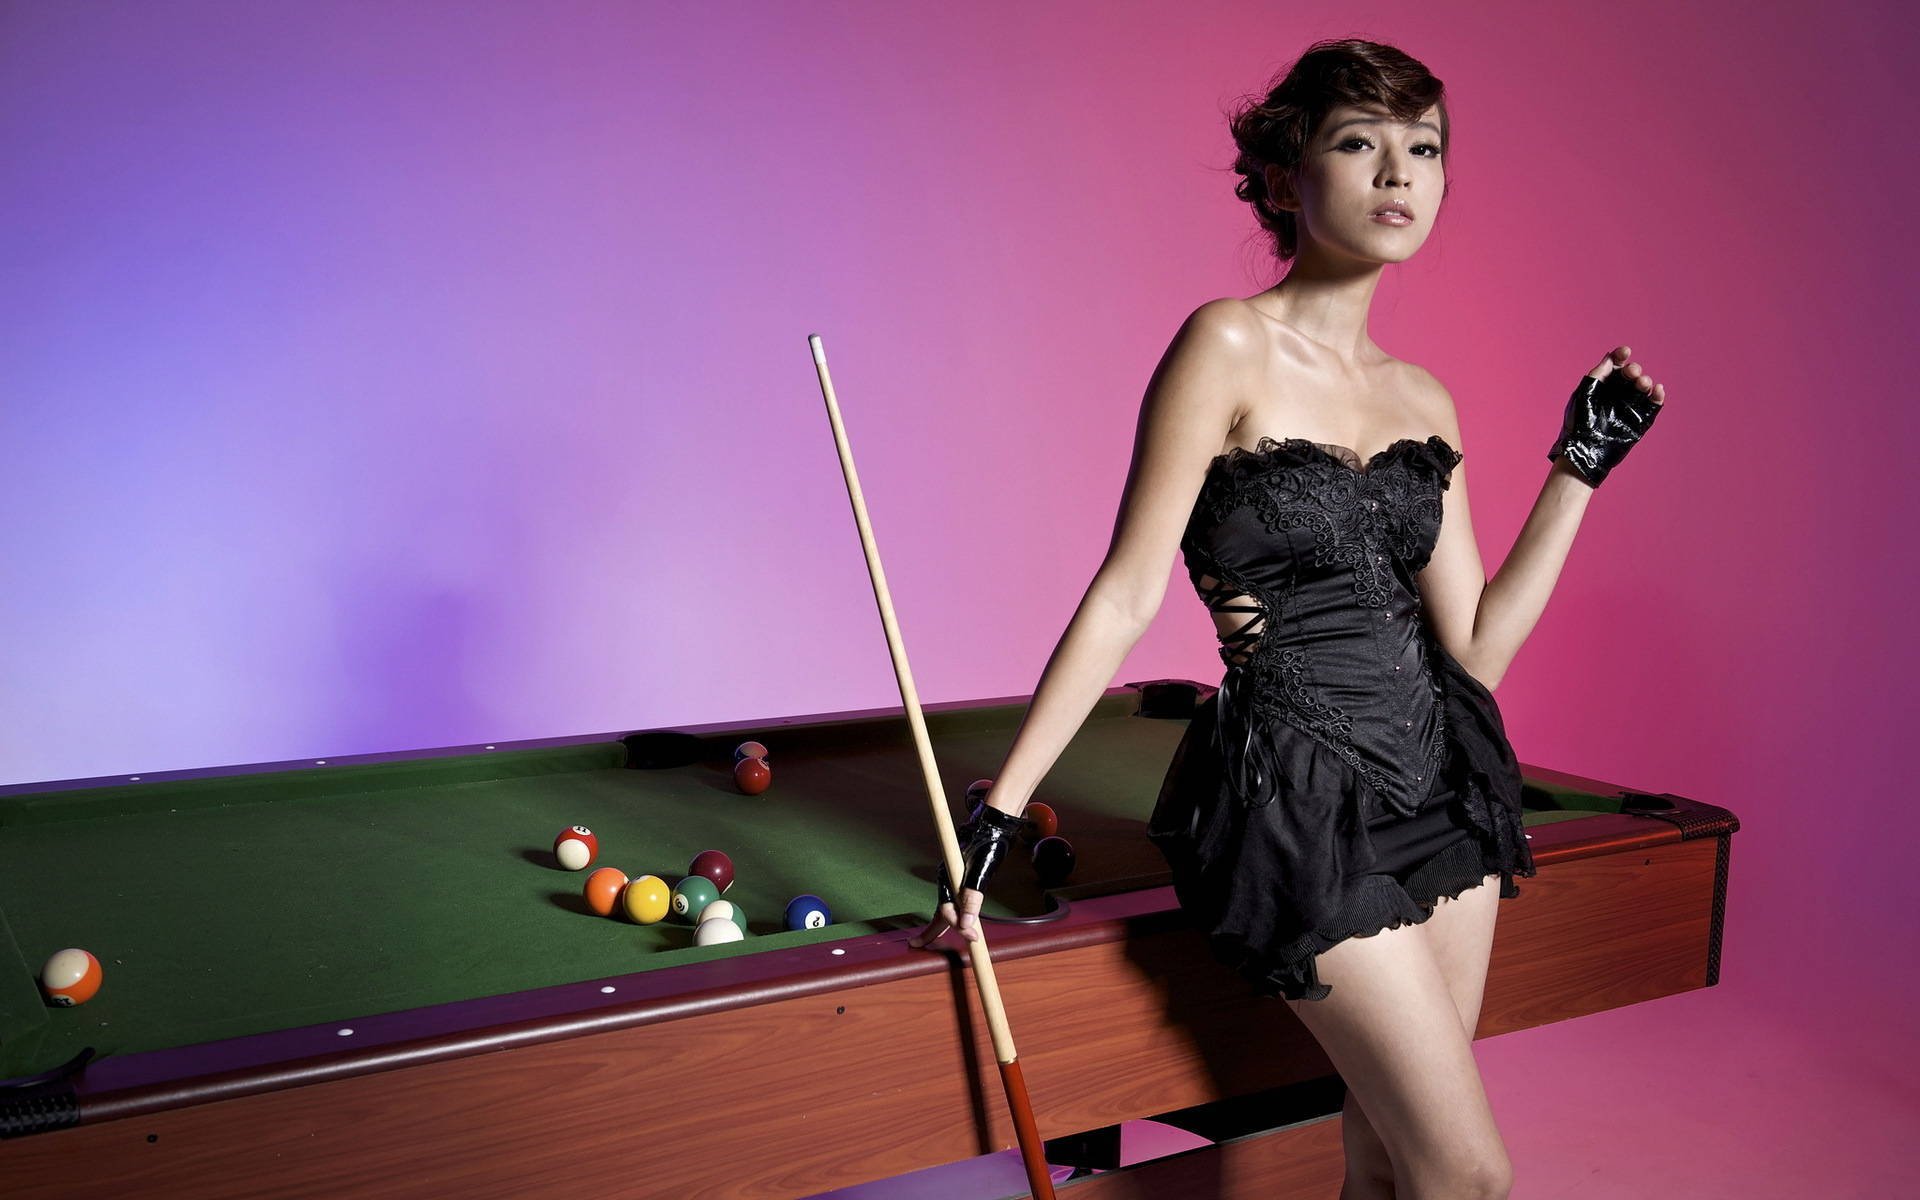 https://wallup.net/wp-content/uploads/2019/09/681152-billiards-pool-sports-1pool-sexy-babe-girl-women-woman-female-asian.jpg